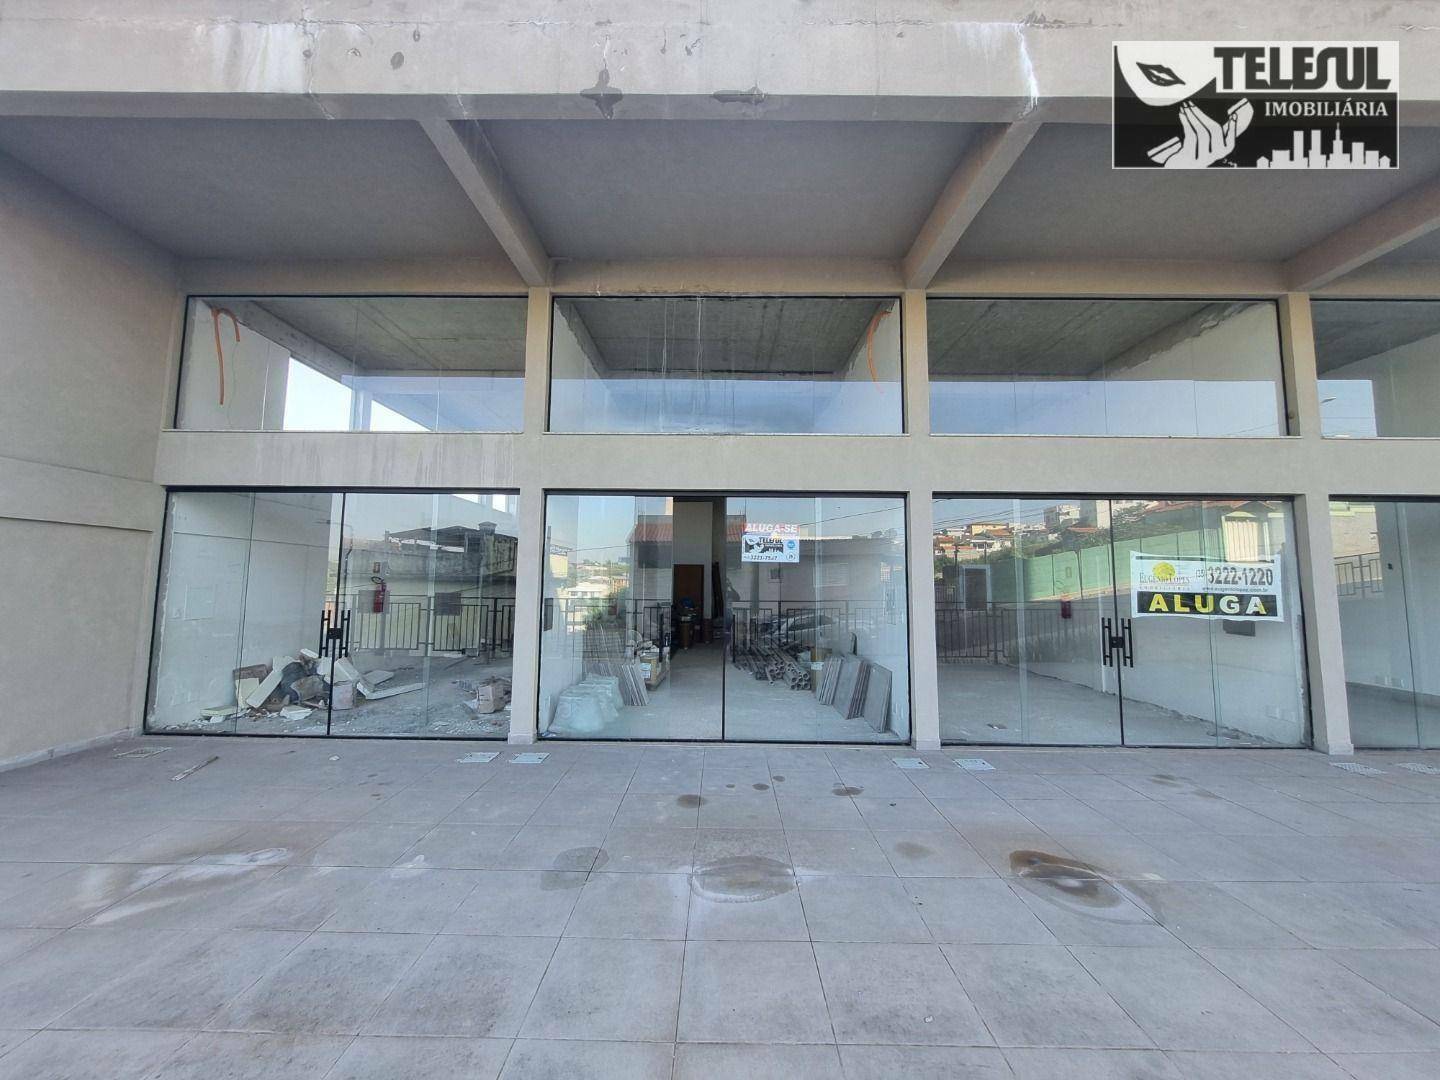 Loja-Salão, 55 m² - Foto 1